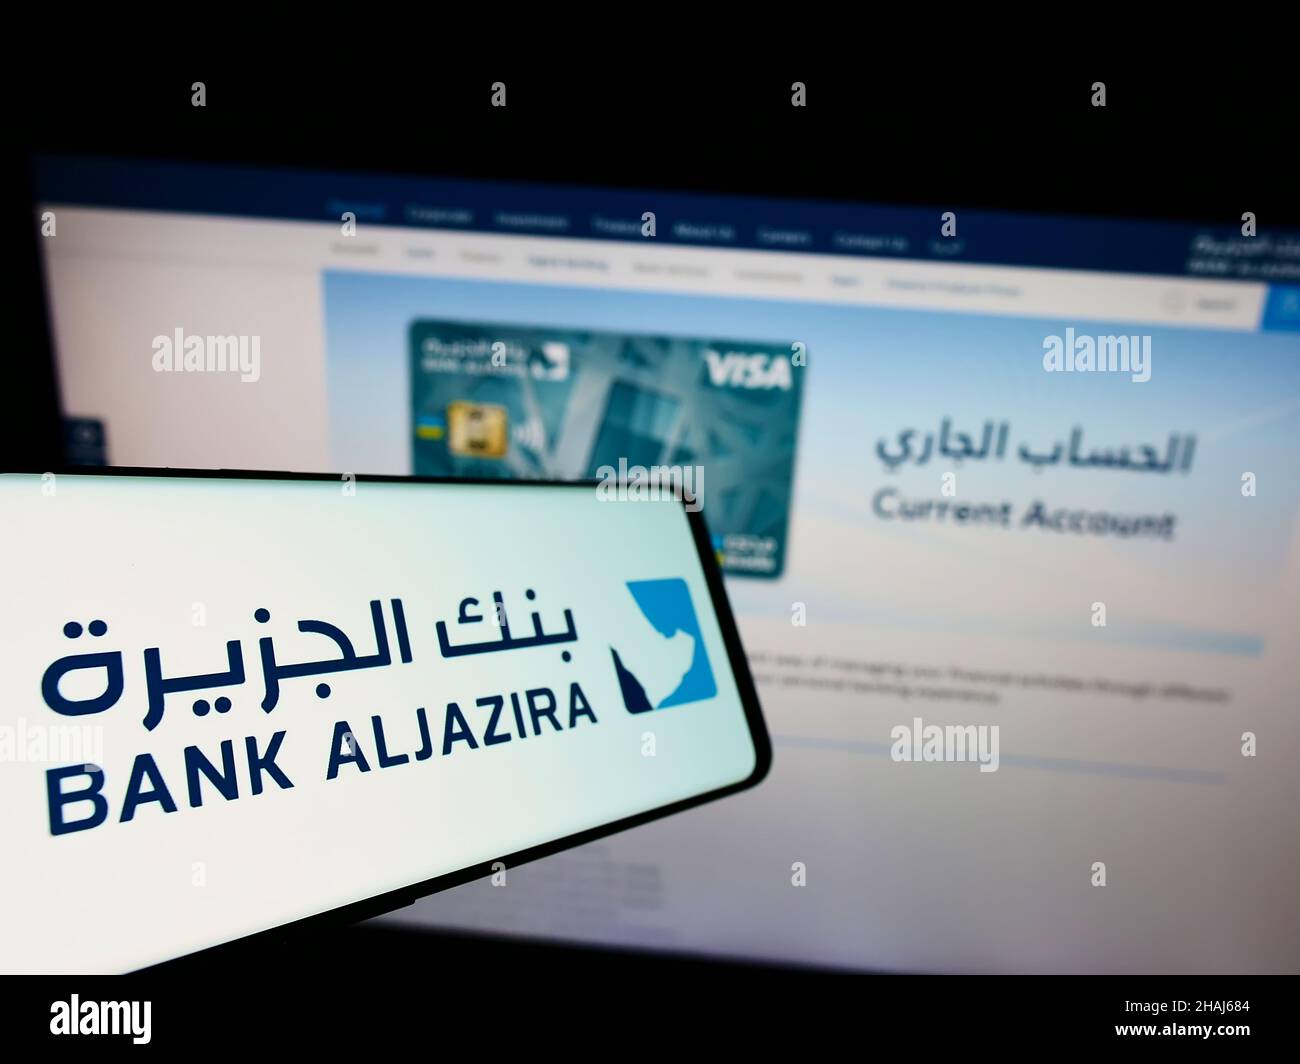 Smartphone with logo of Saudi Arabian company Bank Aljazira (BAJ) on screen in front of business website. Focus on center-left of phone display. Stock Photo